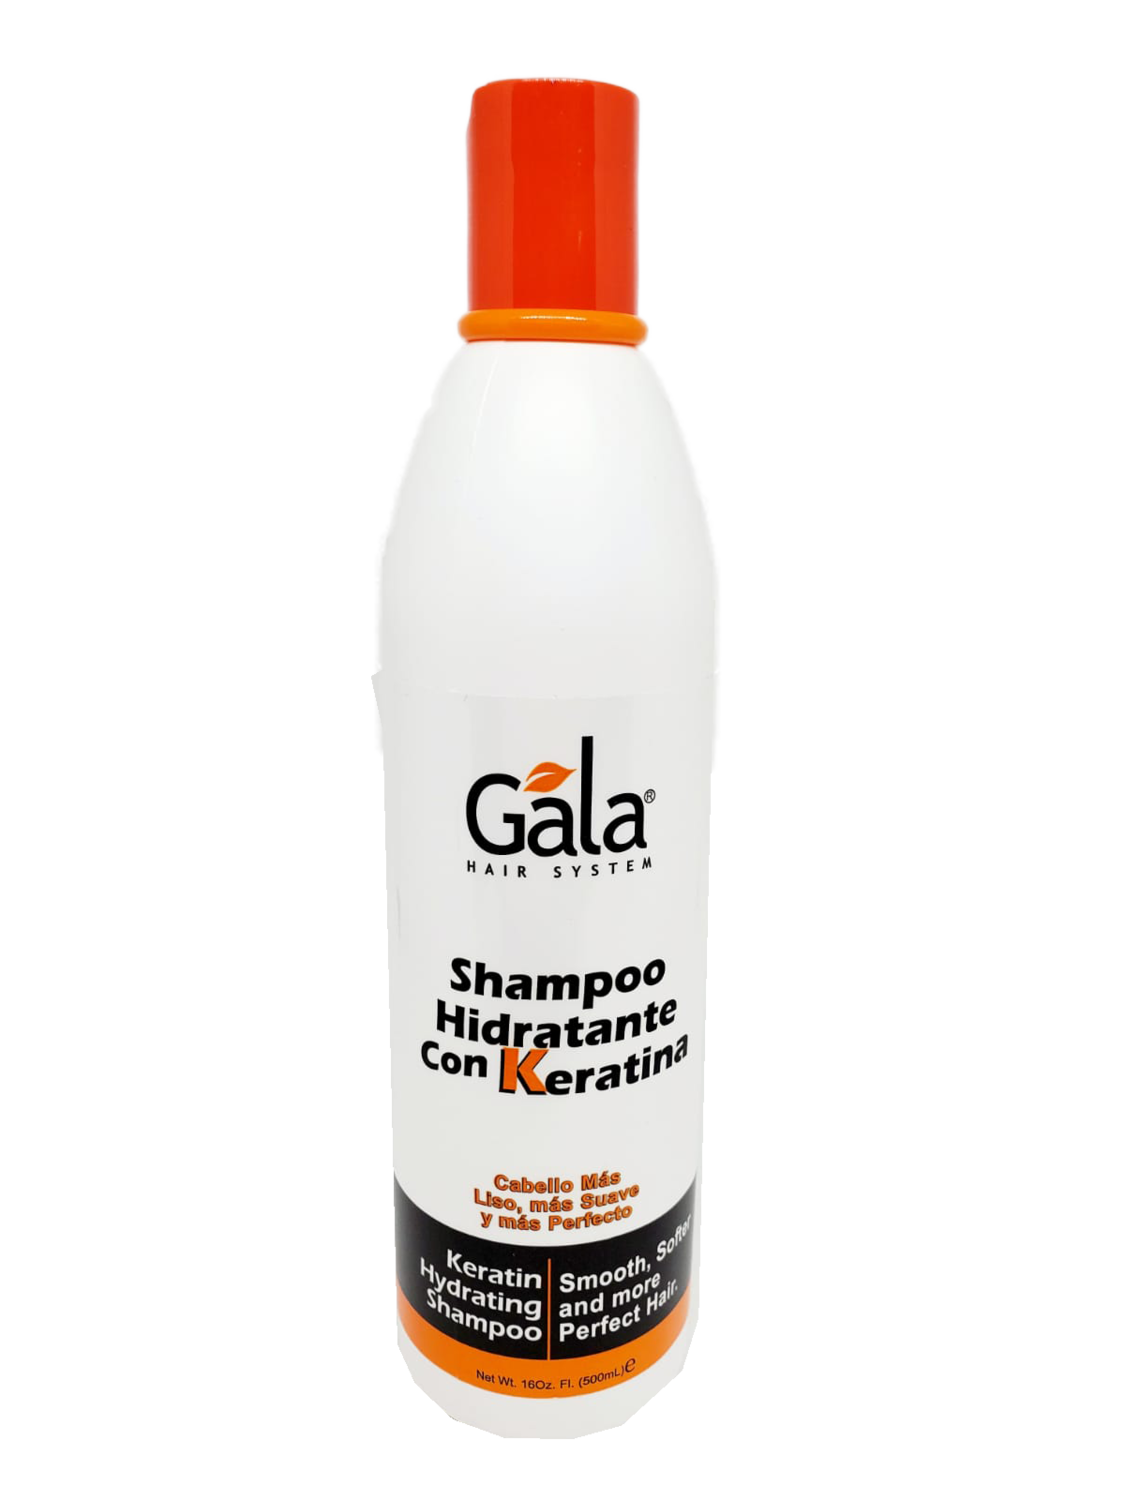 Gala Shampoo Hidratante con Keratina